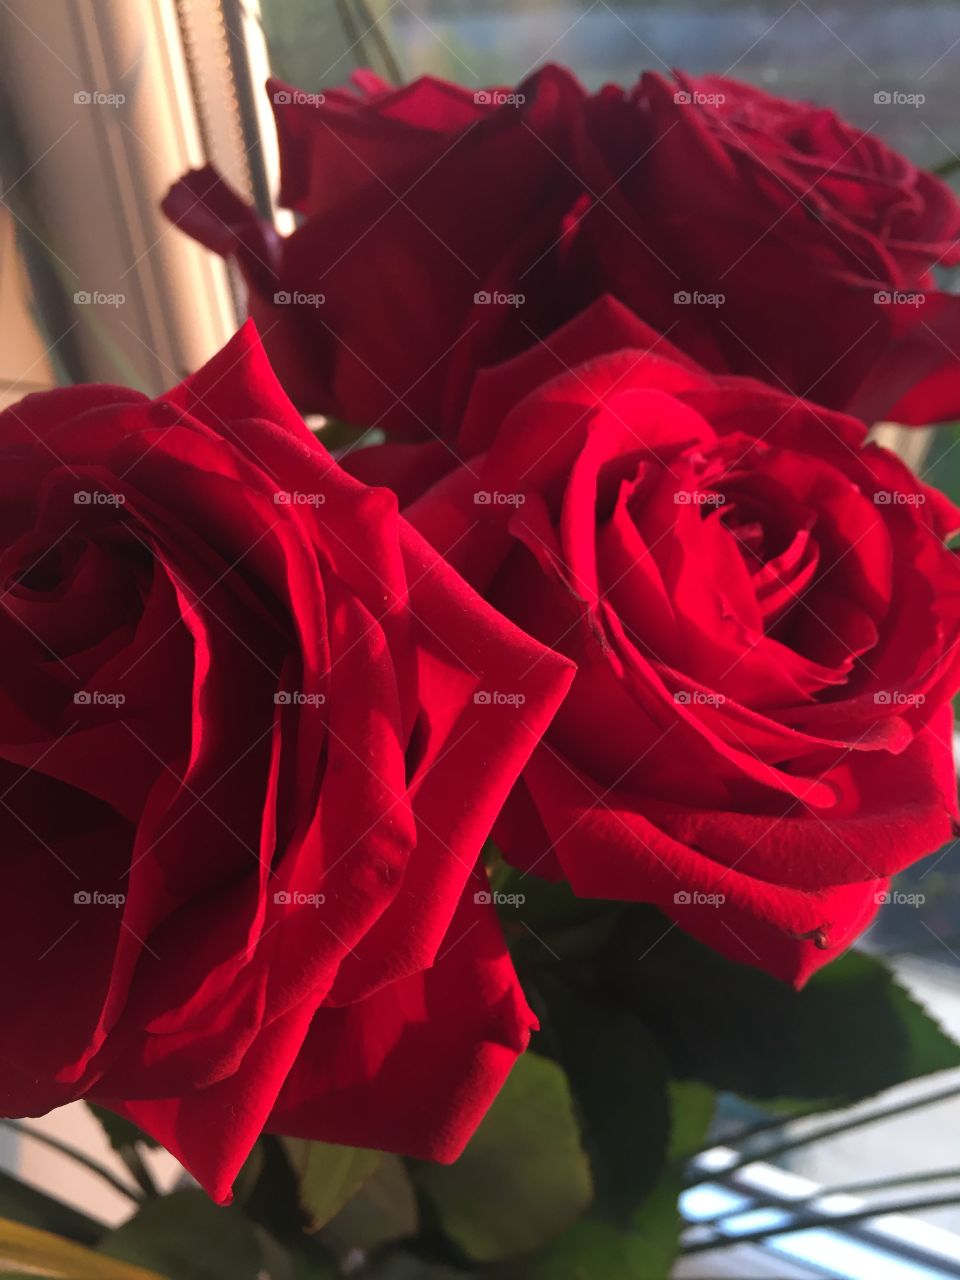 Radiant red roses 